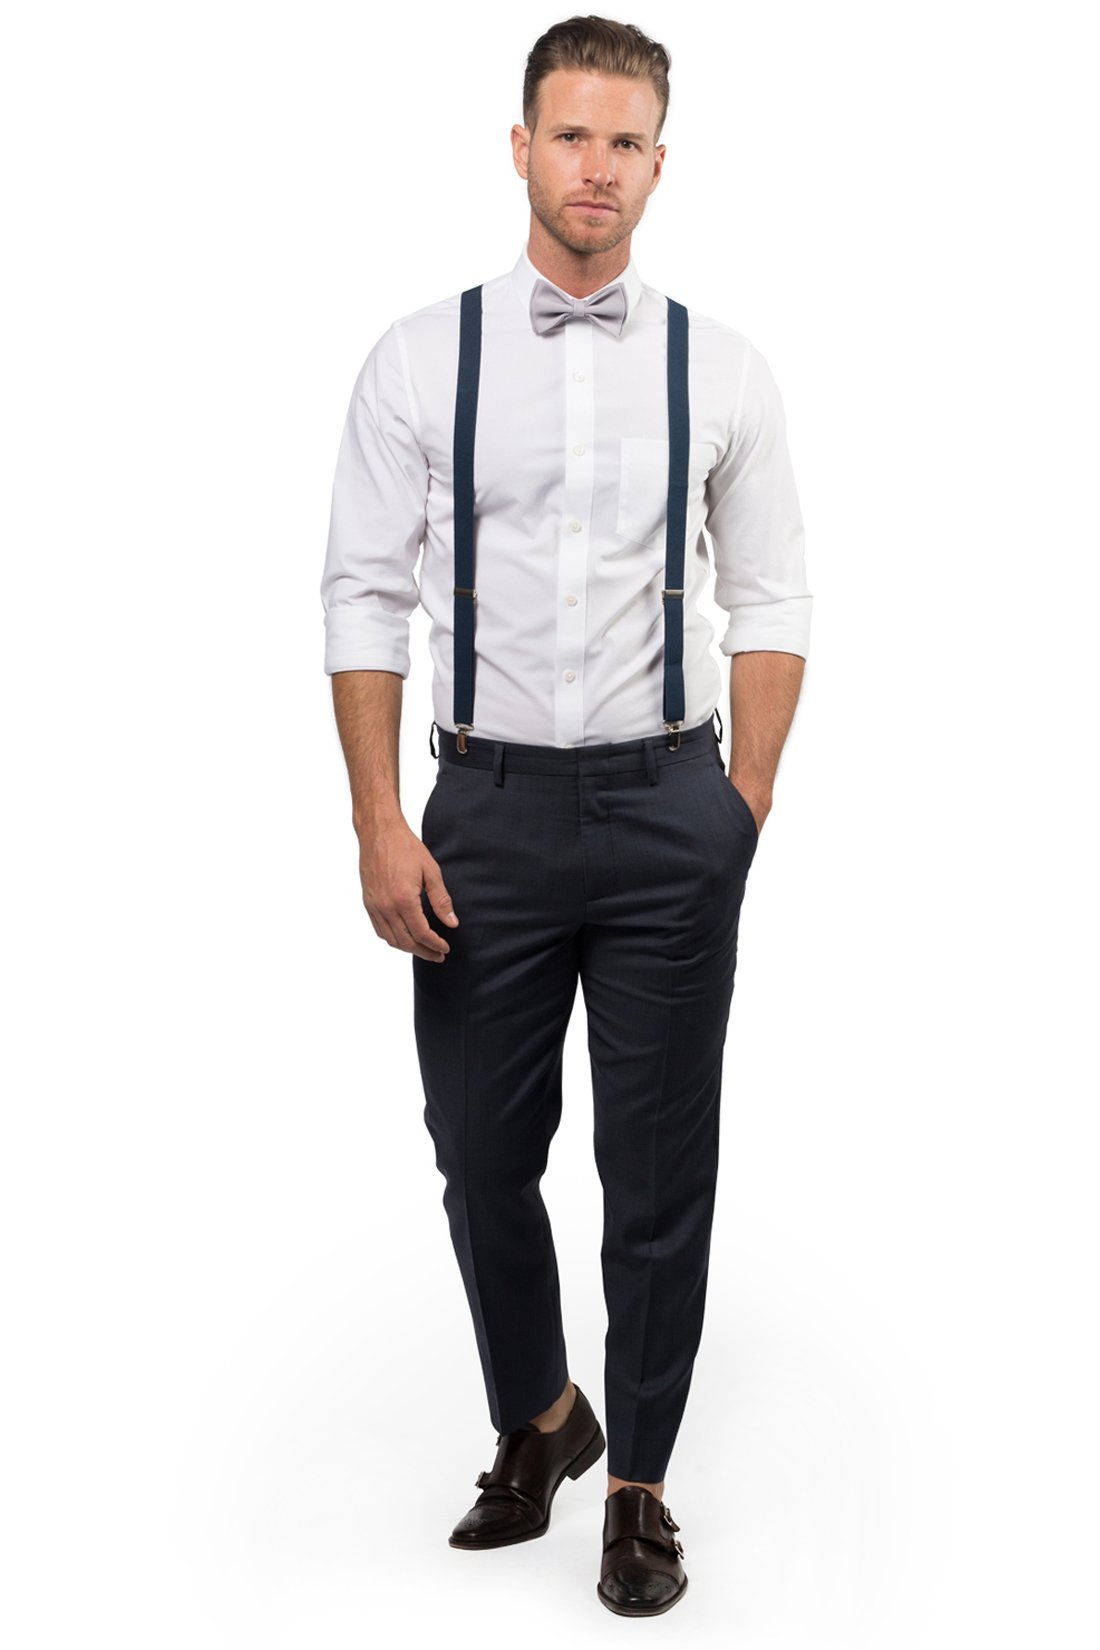 Navy Suspenders & Light Gray Bow Tie